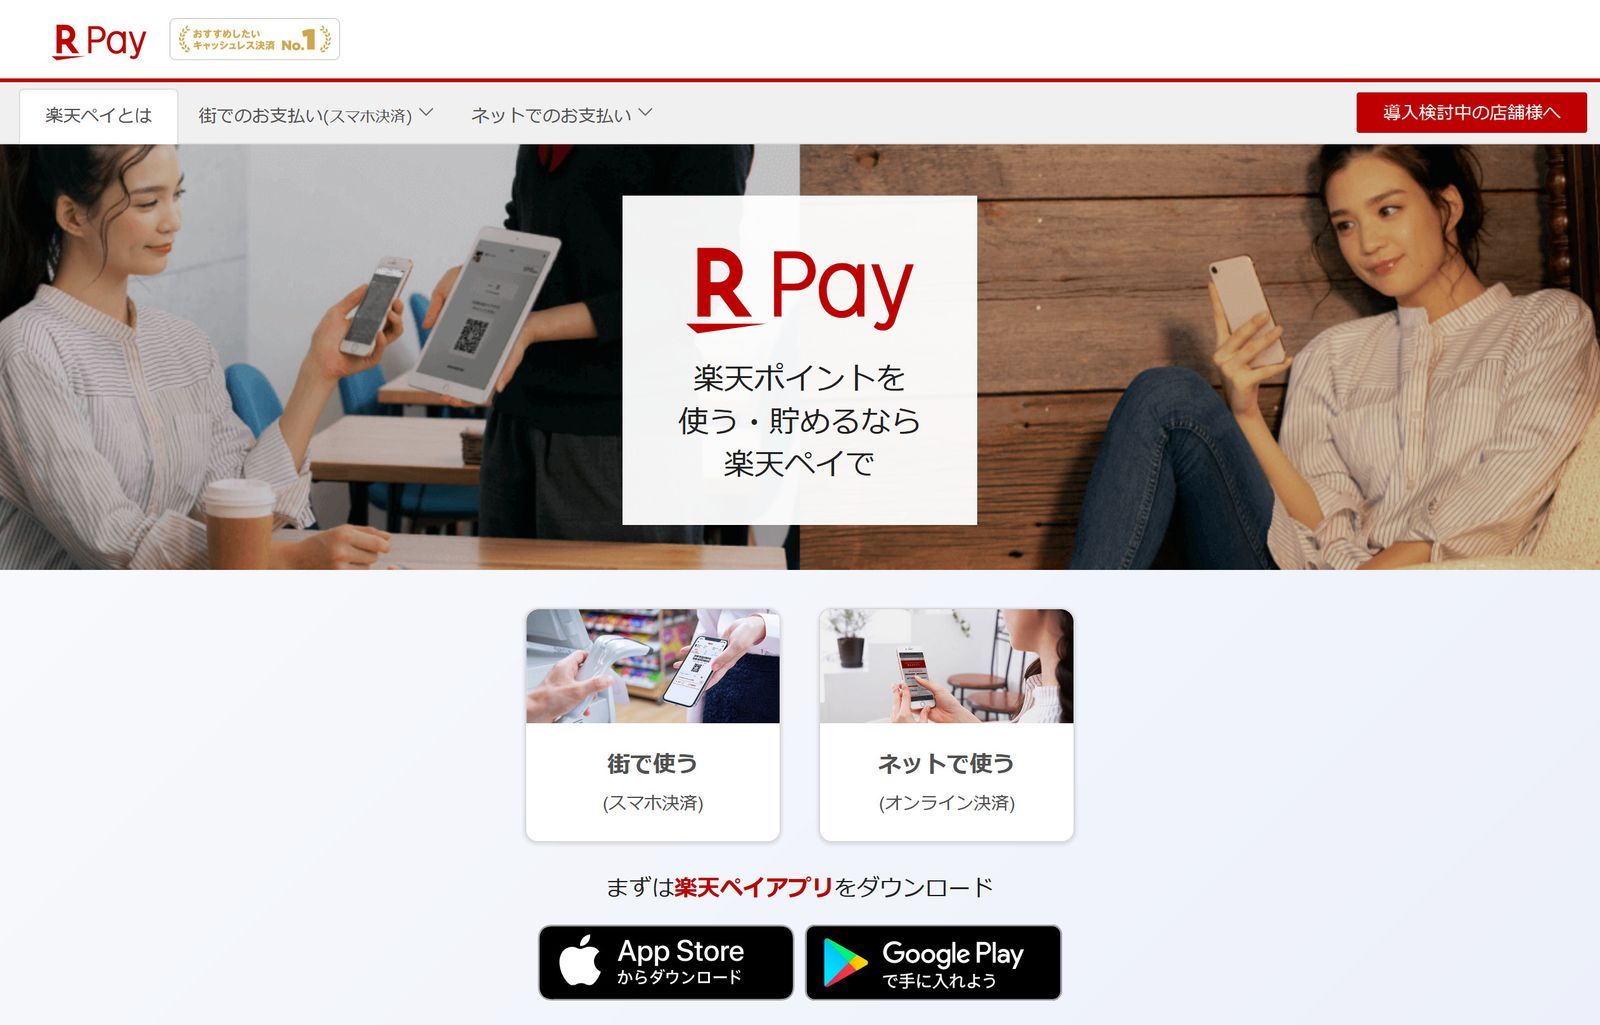 Screenshot of Rakuten Pay website